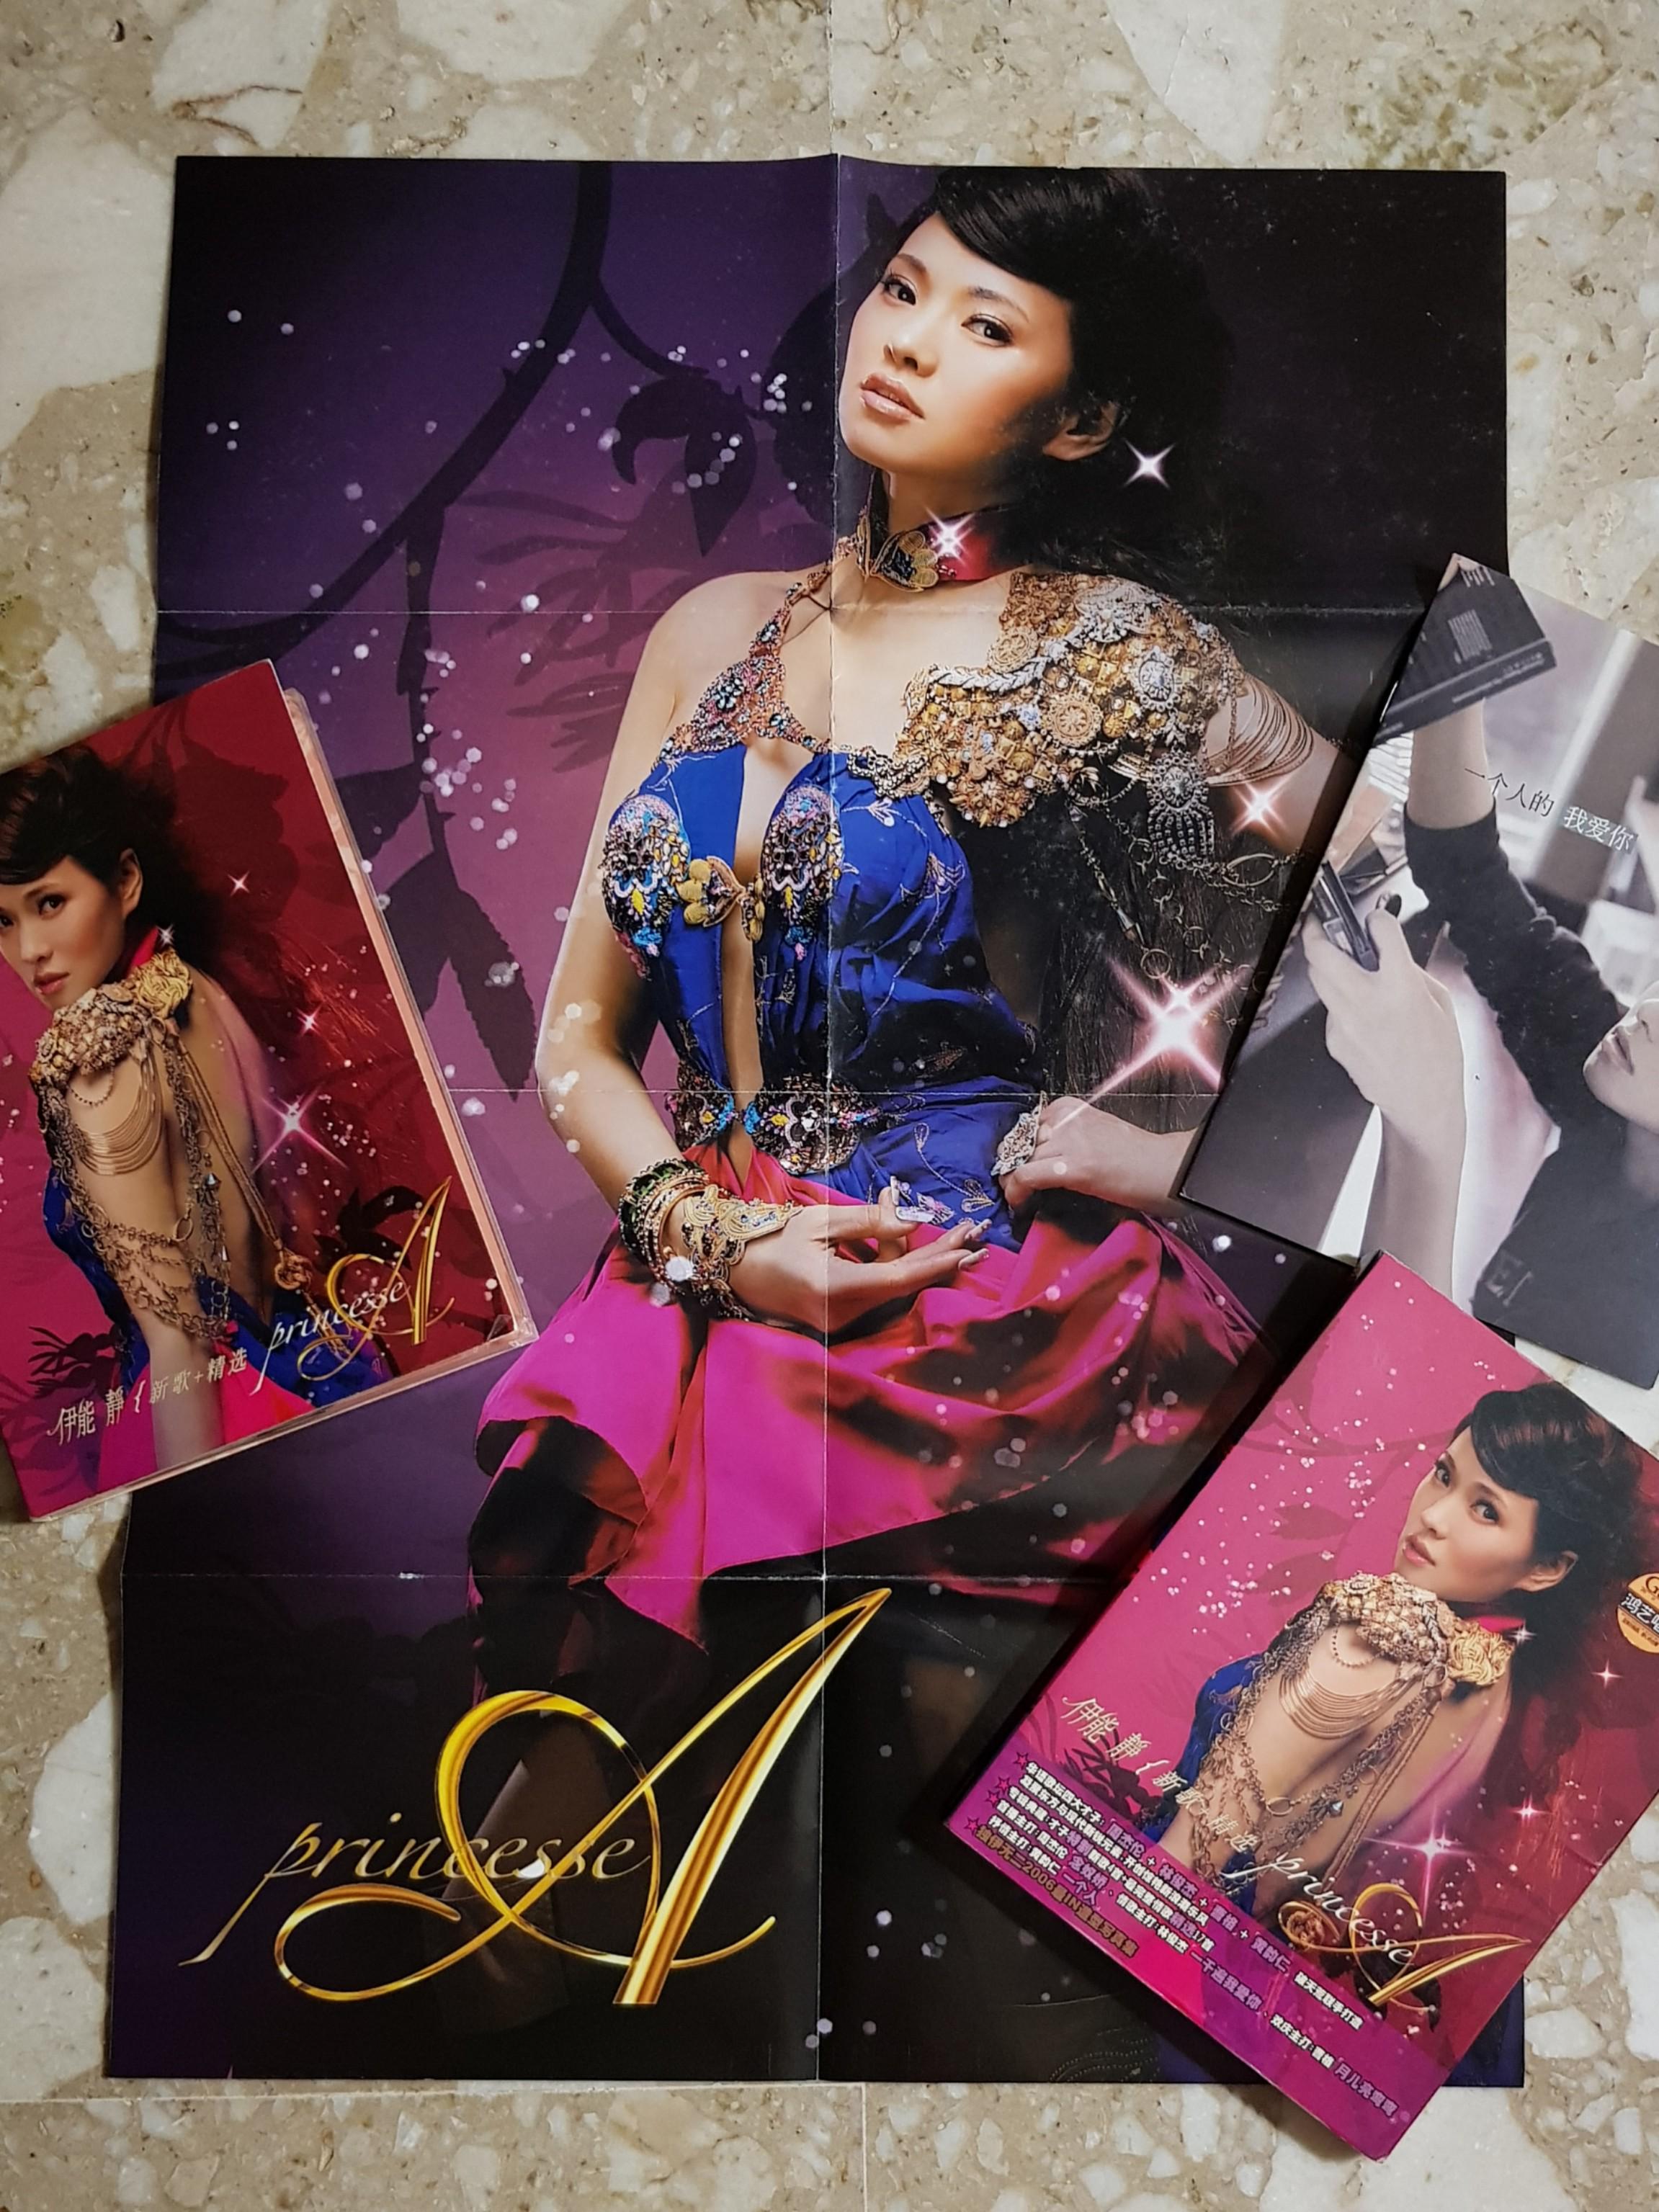 Annie Yi Neng Jing 伊能靜Shizuka Inou 伊能静- Princess A 新歌+ 精選2CD Boxset